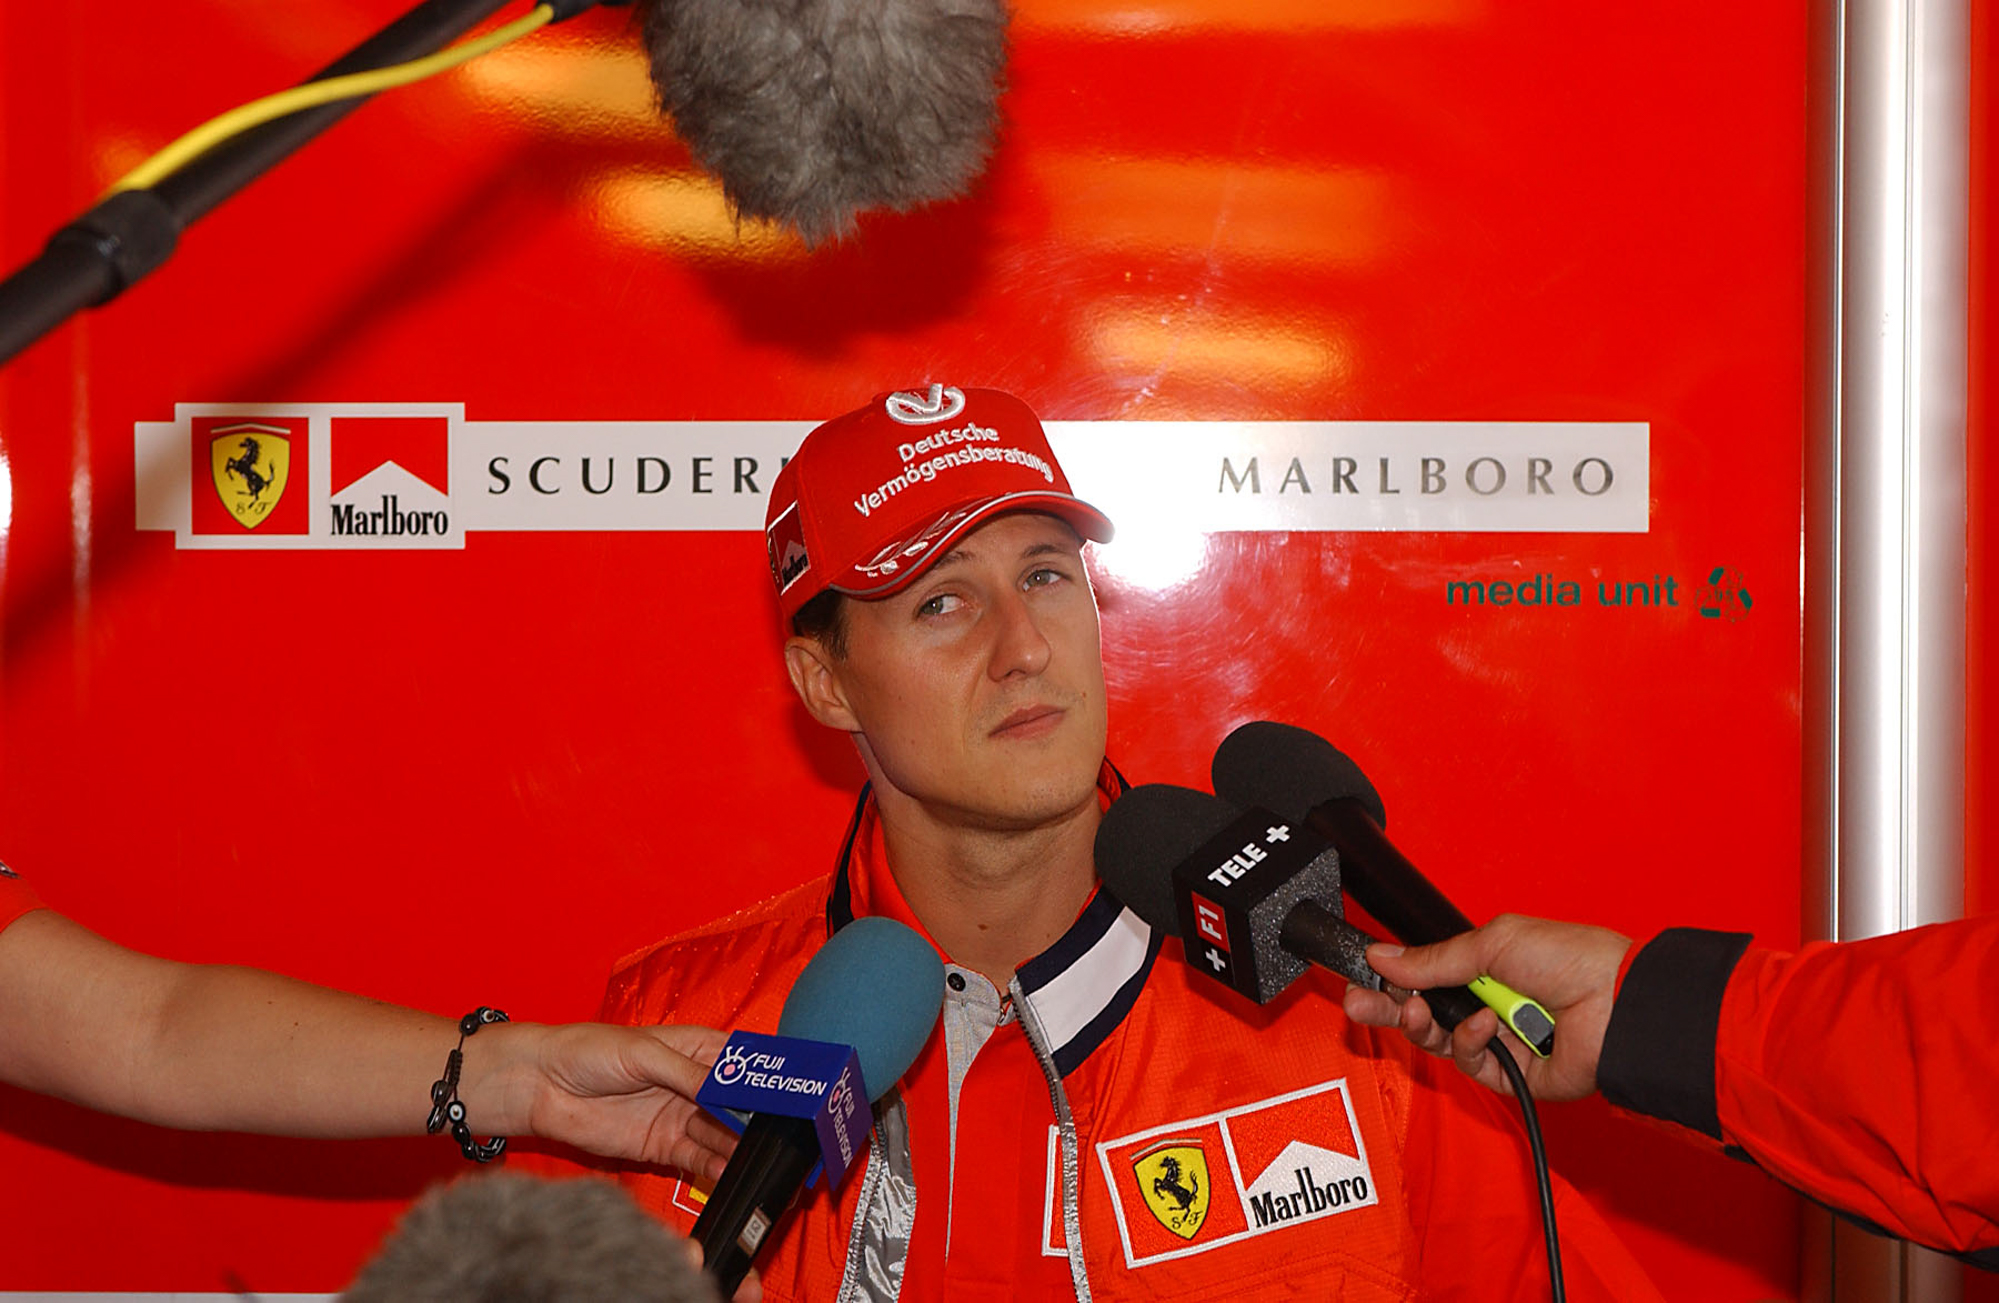   F 1. FIA President Michael Schumacher spoke.  